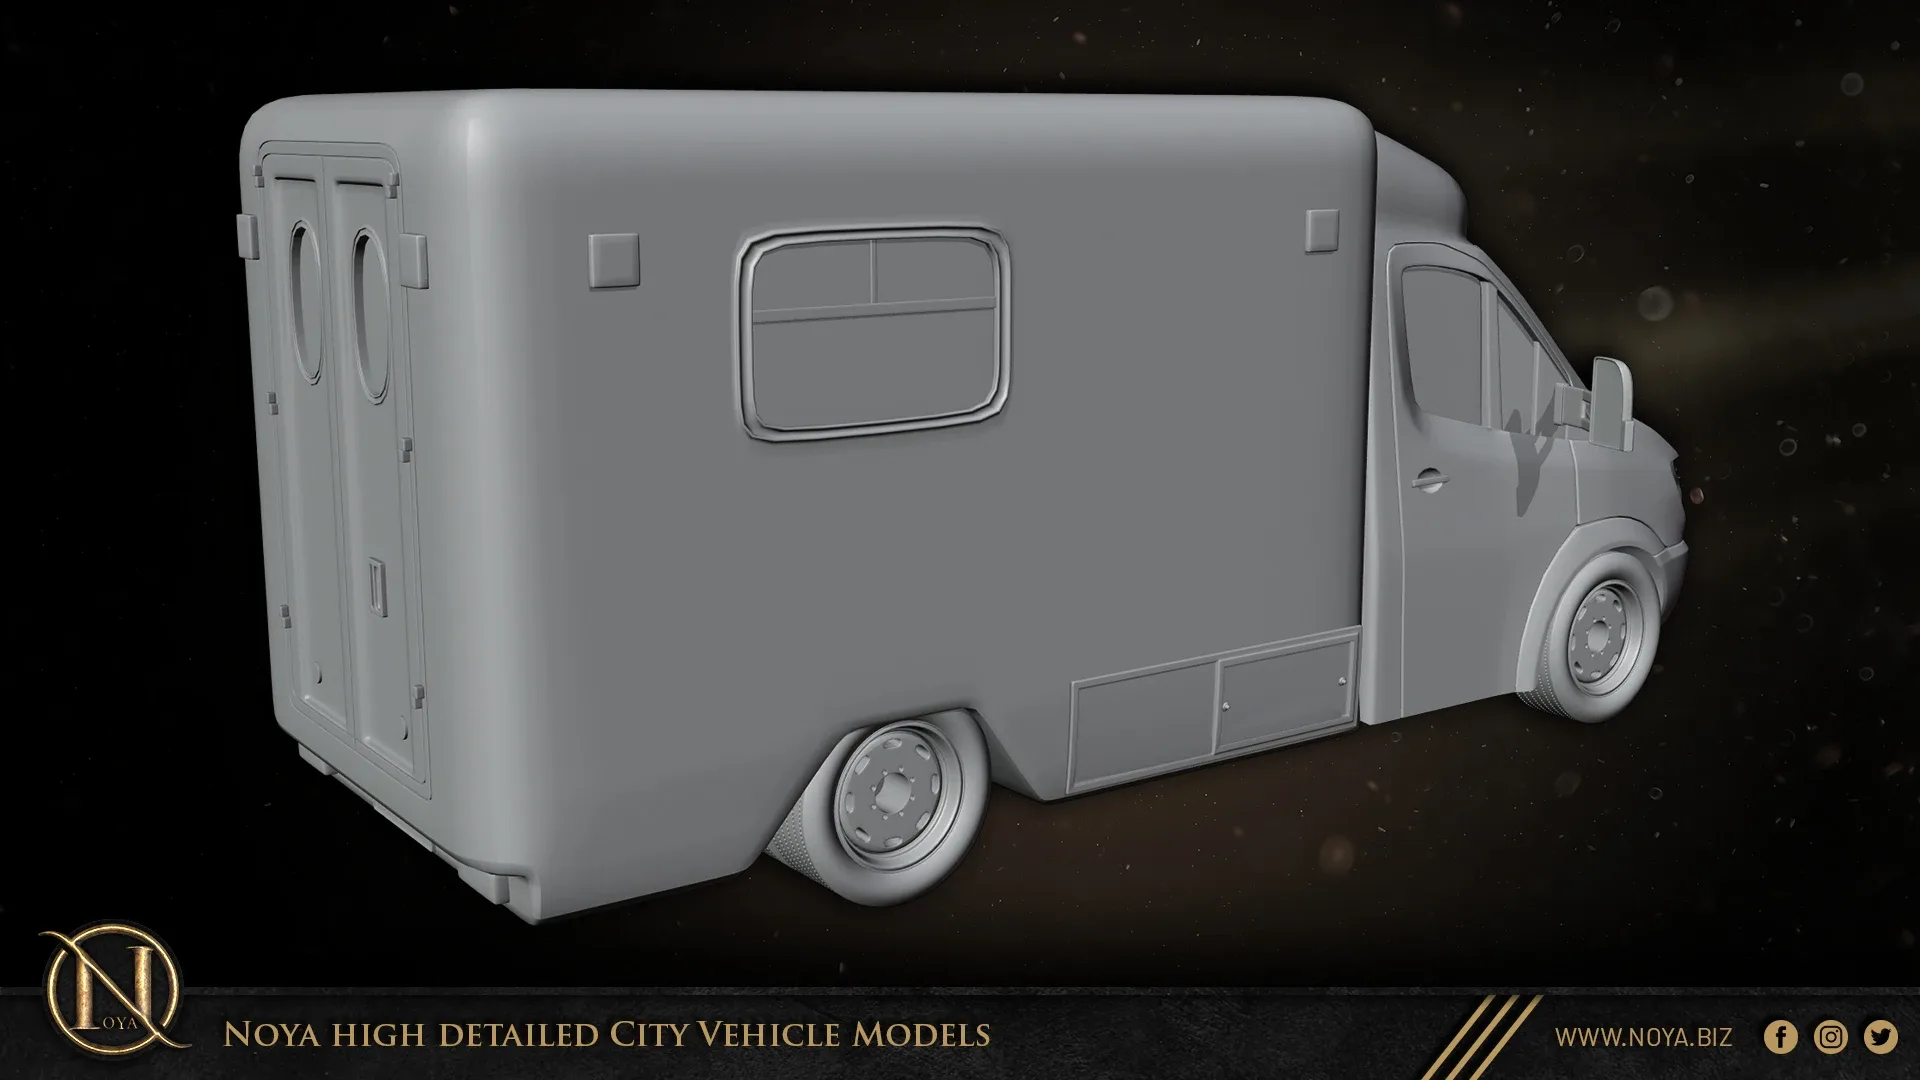 Noya High Detailed City Vehicle Models